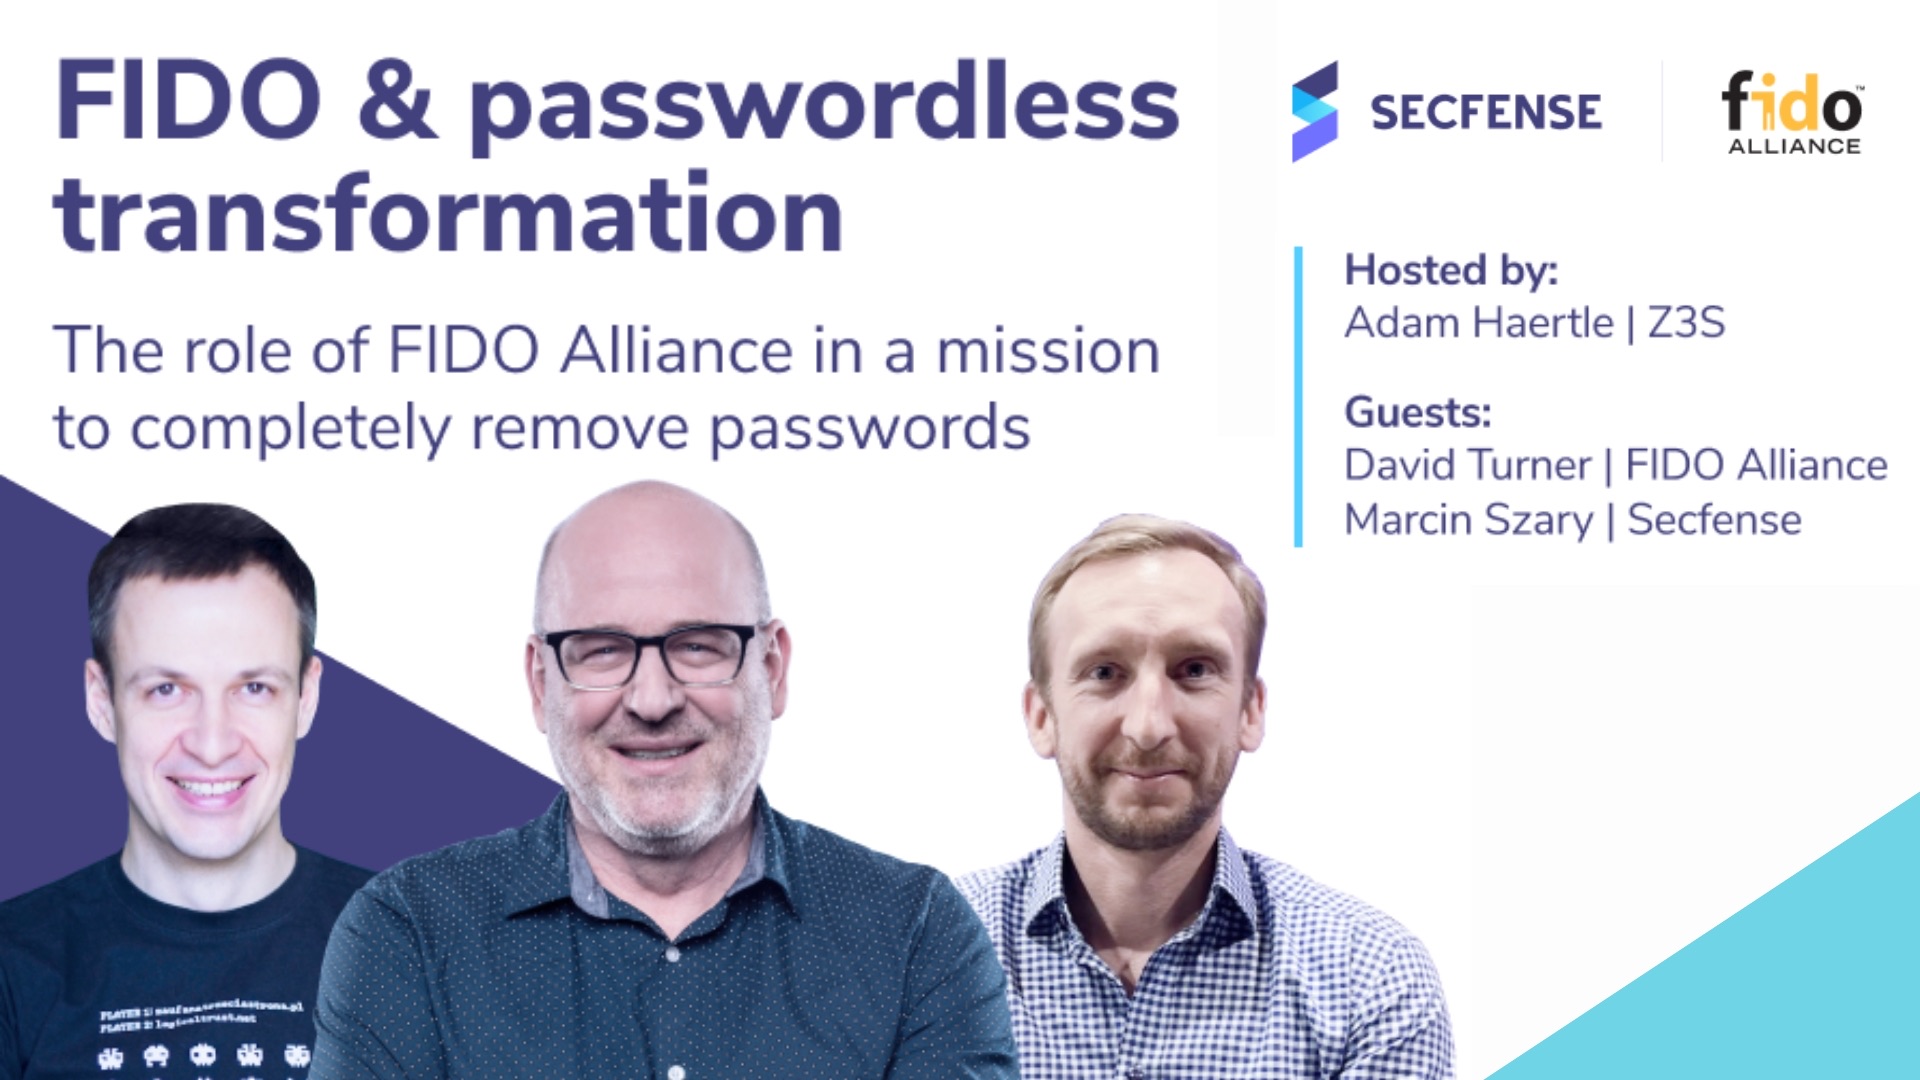 FIDO passwordless transformation webinar with FIDO Alliance and Secfense